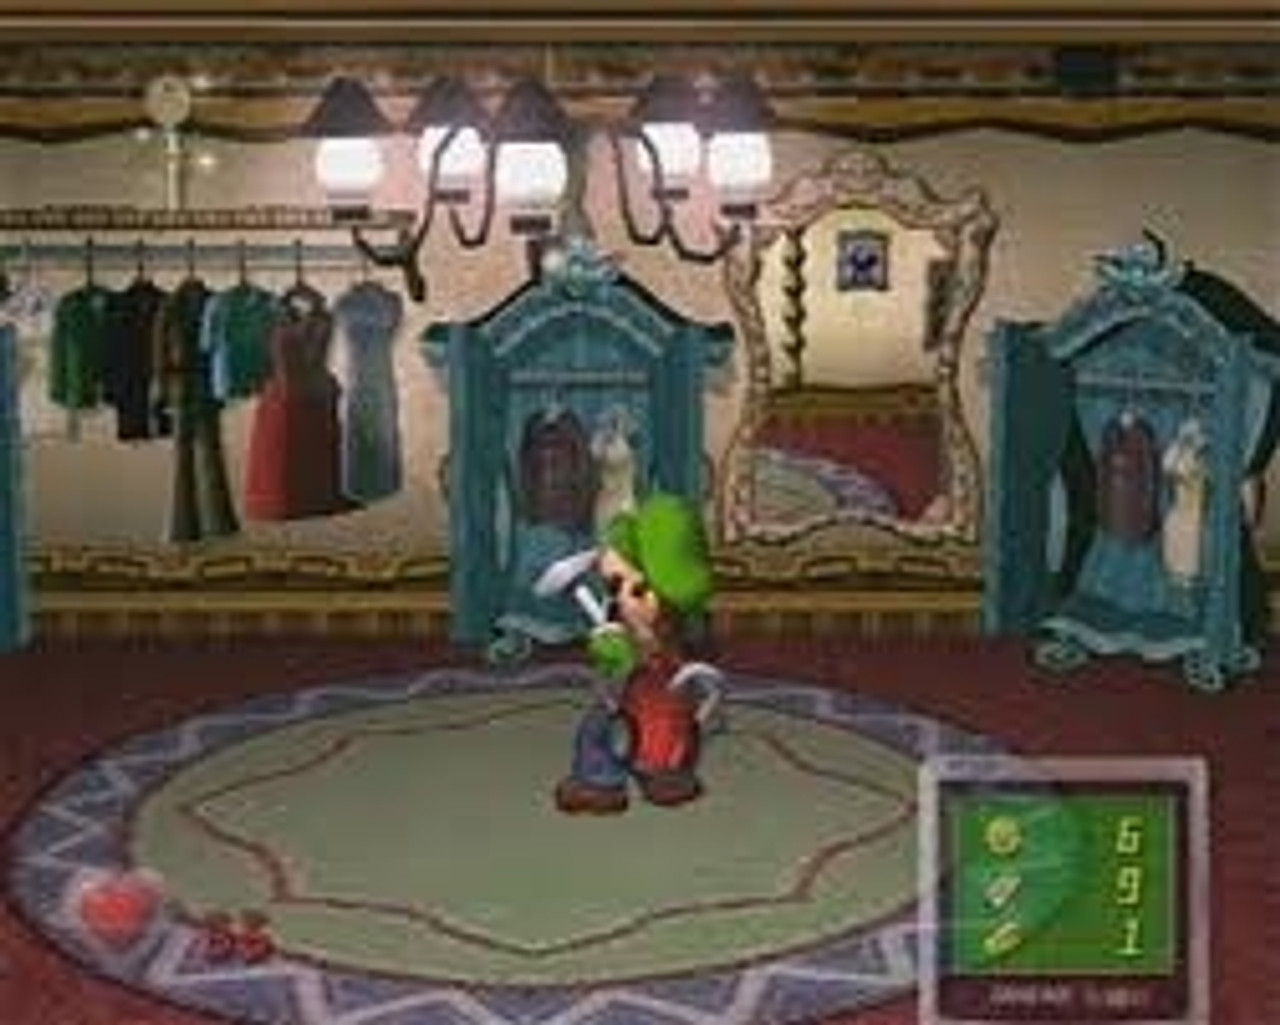 Luigi's Mansion Nintendo GameCube Complete on eBid United States